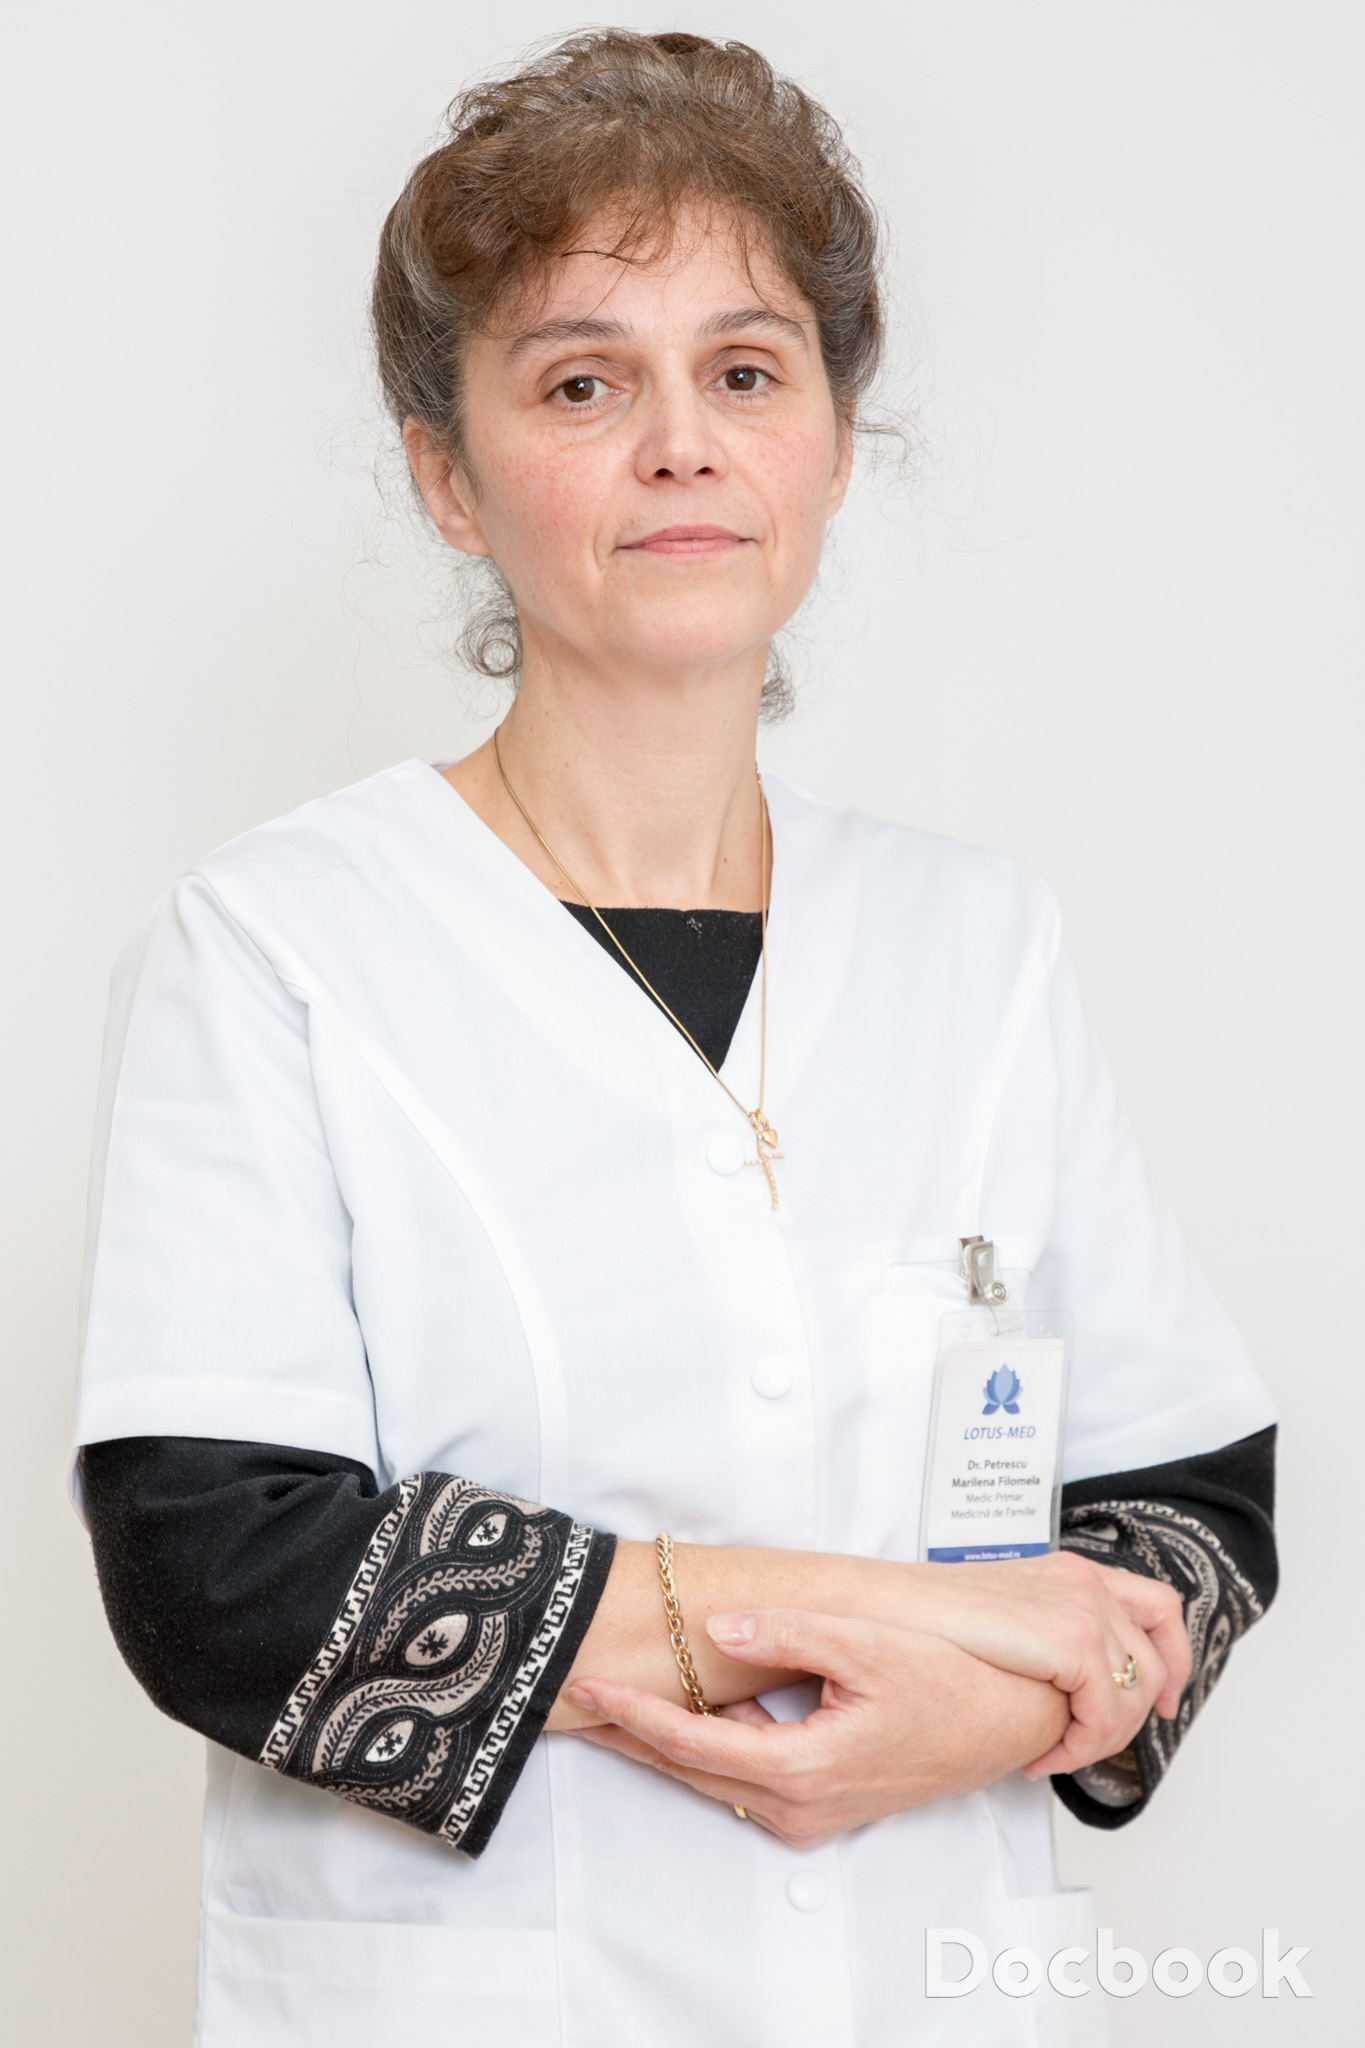 Dr. Marilena Filomela Petrescu